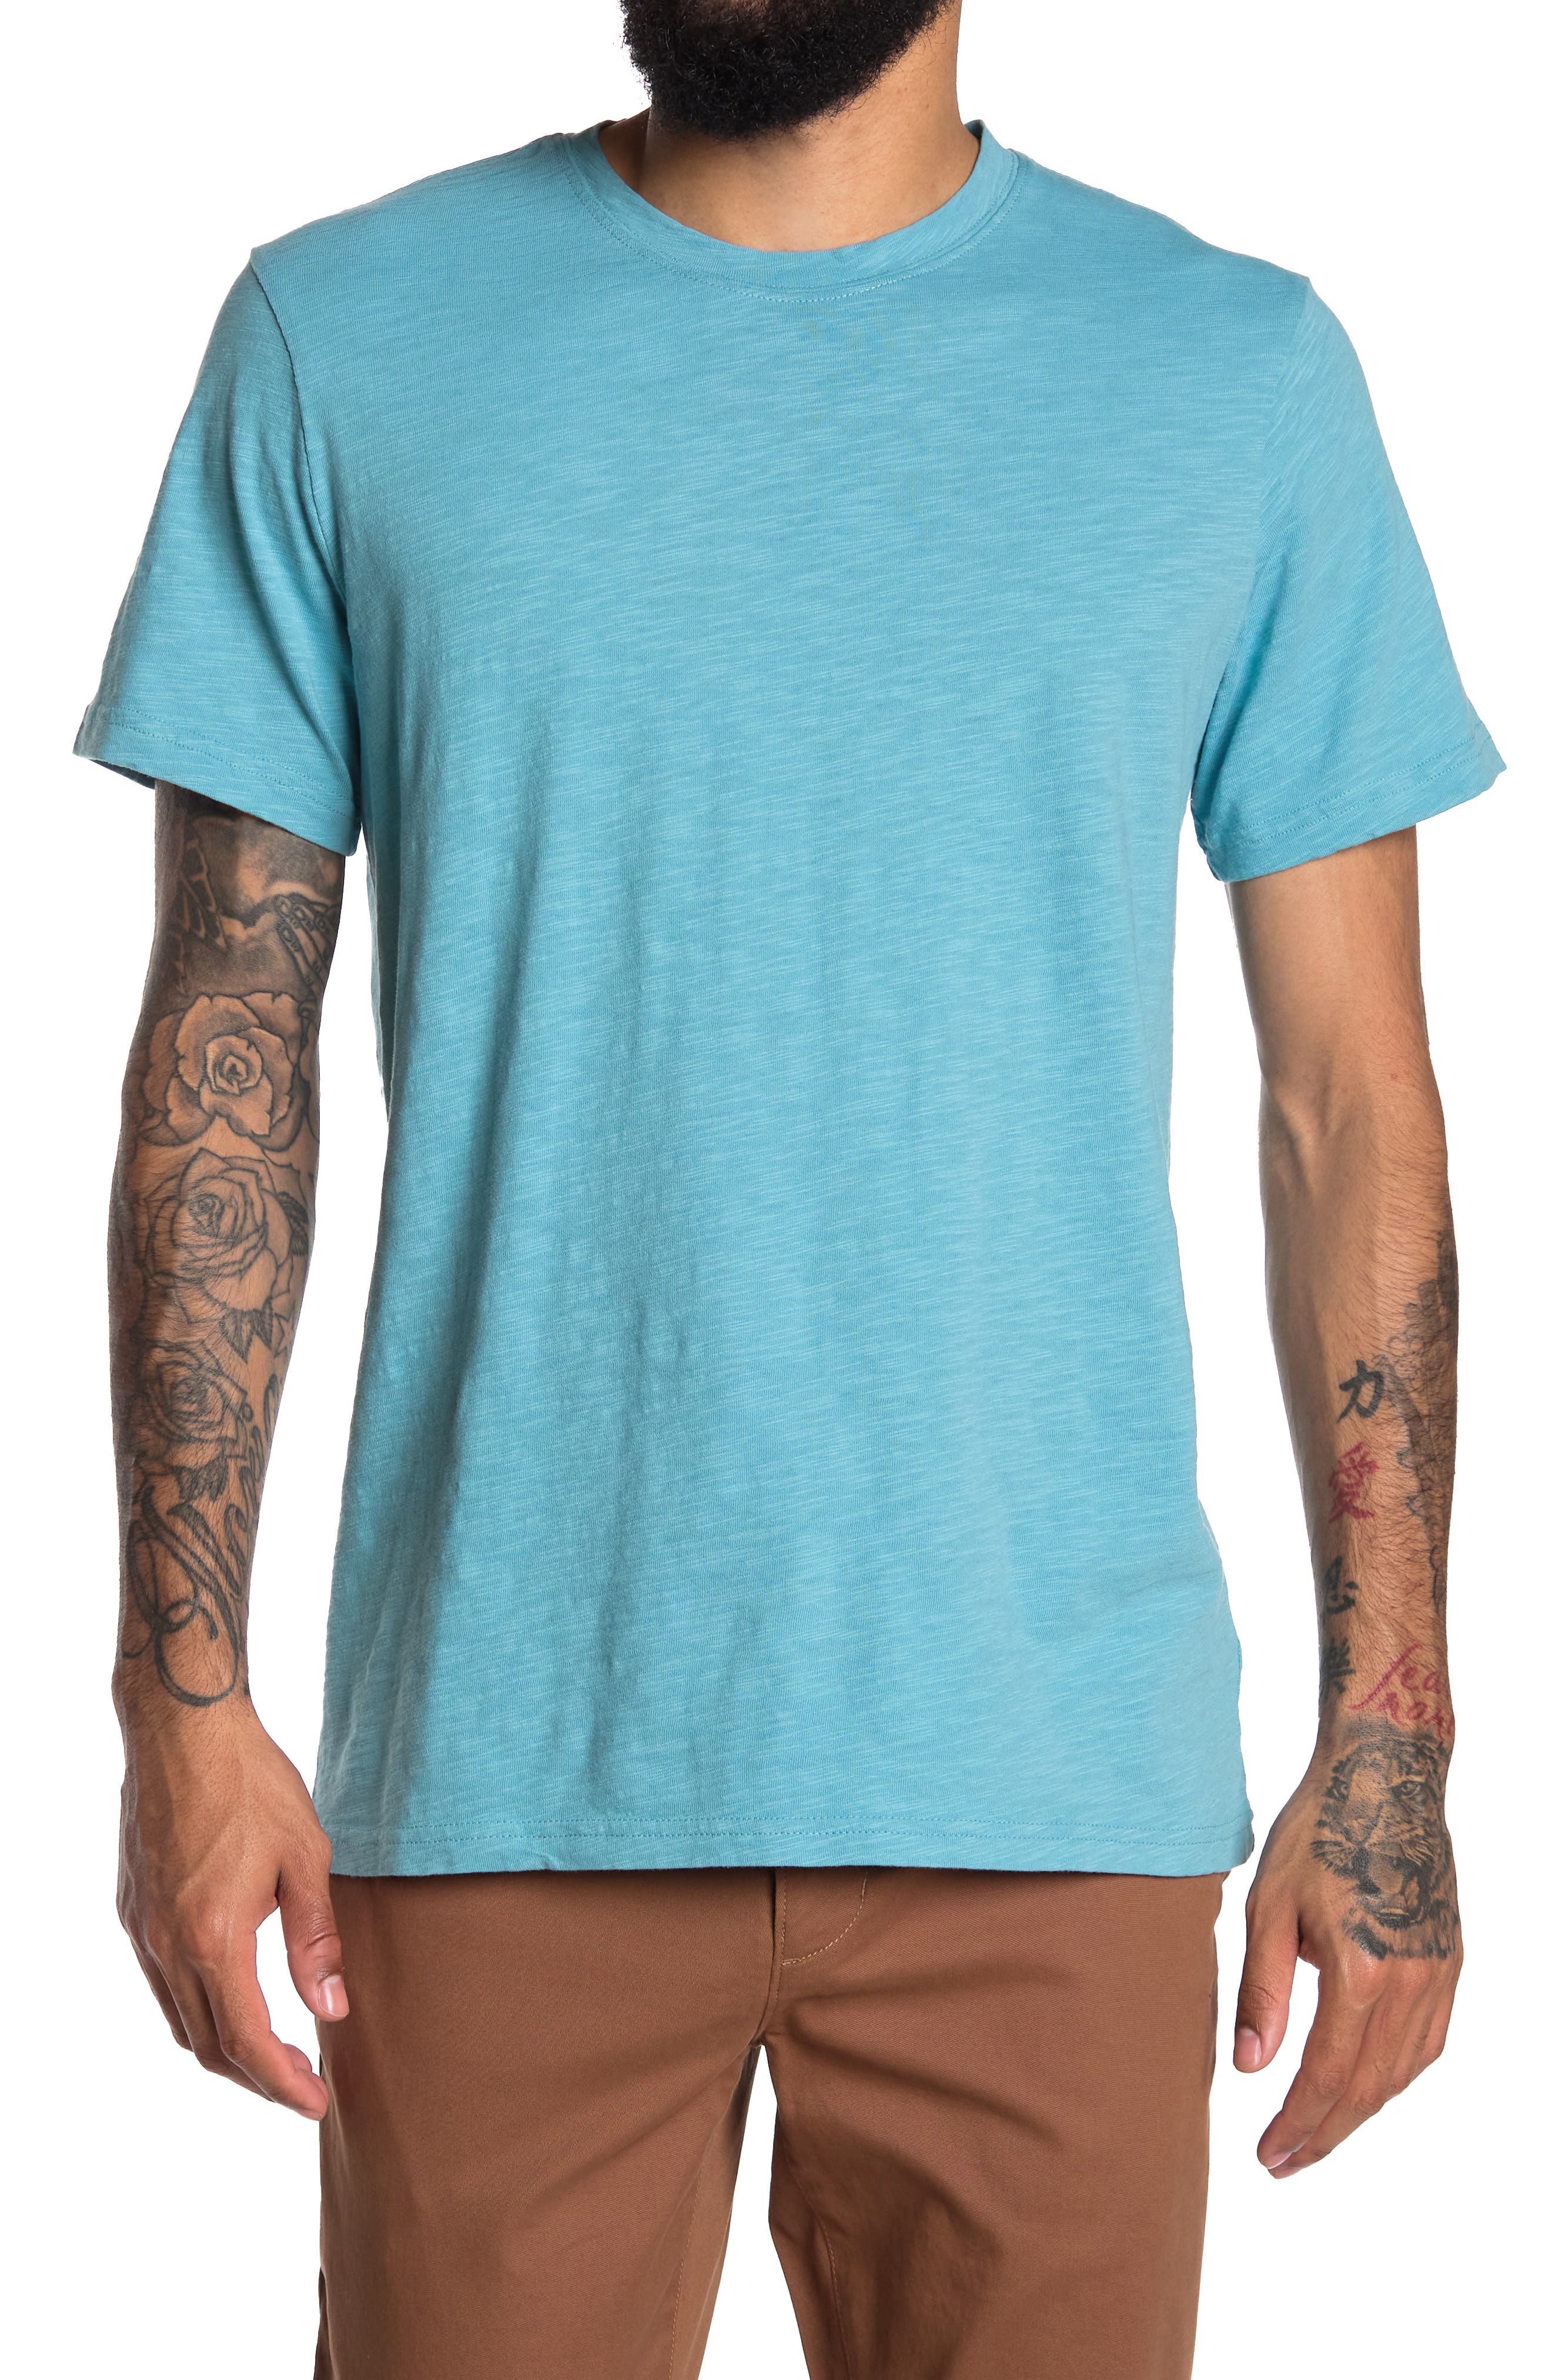 14th & Union Short Sleeve Slub Crew Neck T-shirt In Turquoise/aqua5